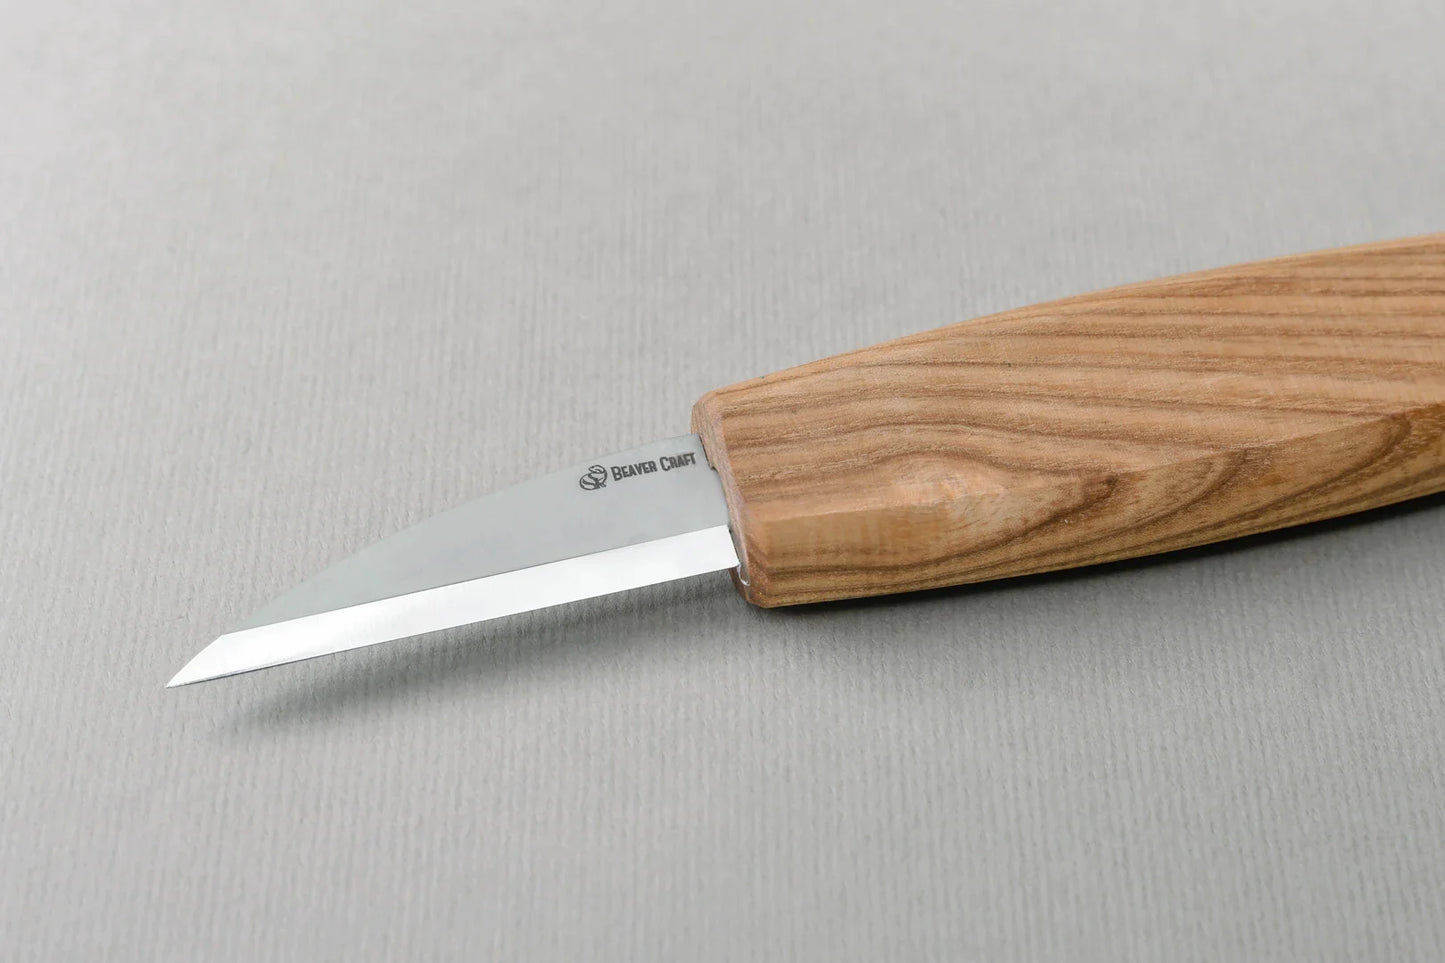 BeaverCraft C14 Wood Carving Whittling Knife Tool